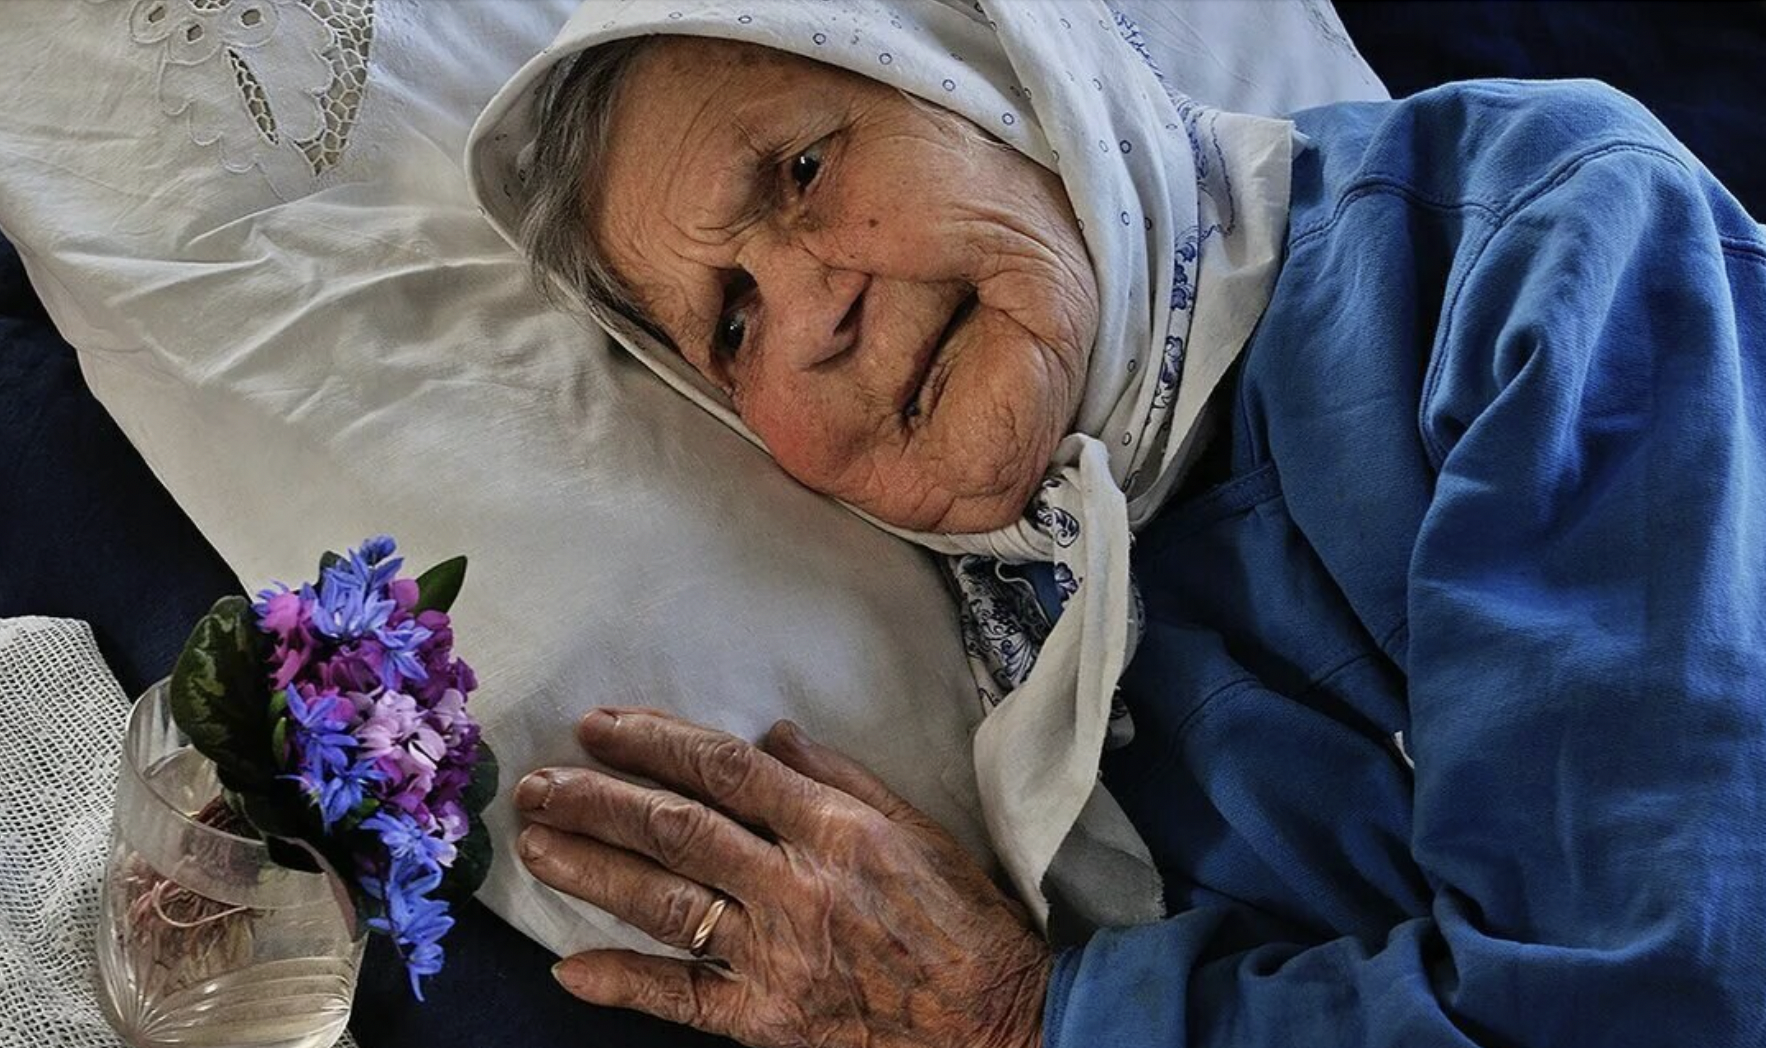 Older lady in bed | Source: Shutterstock